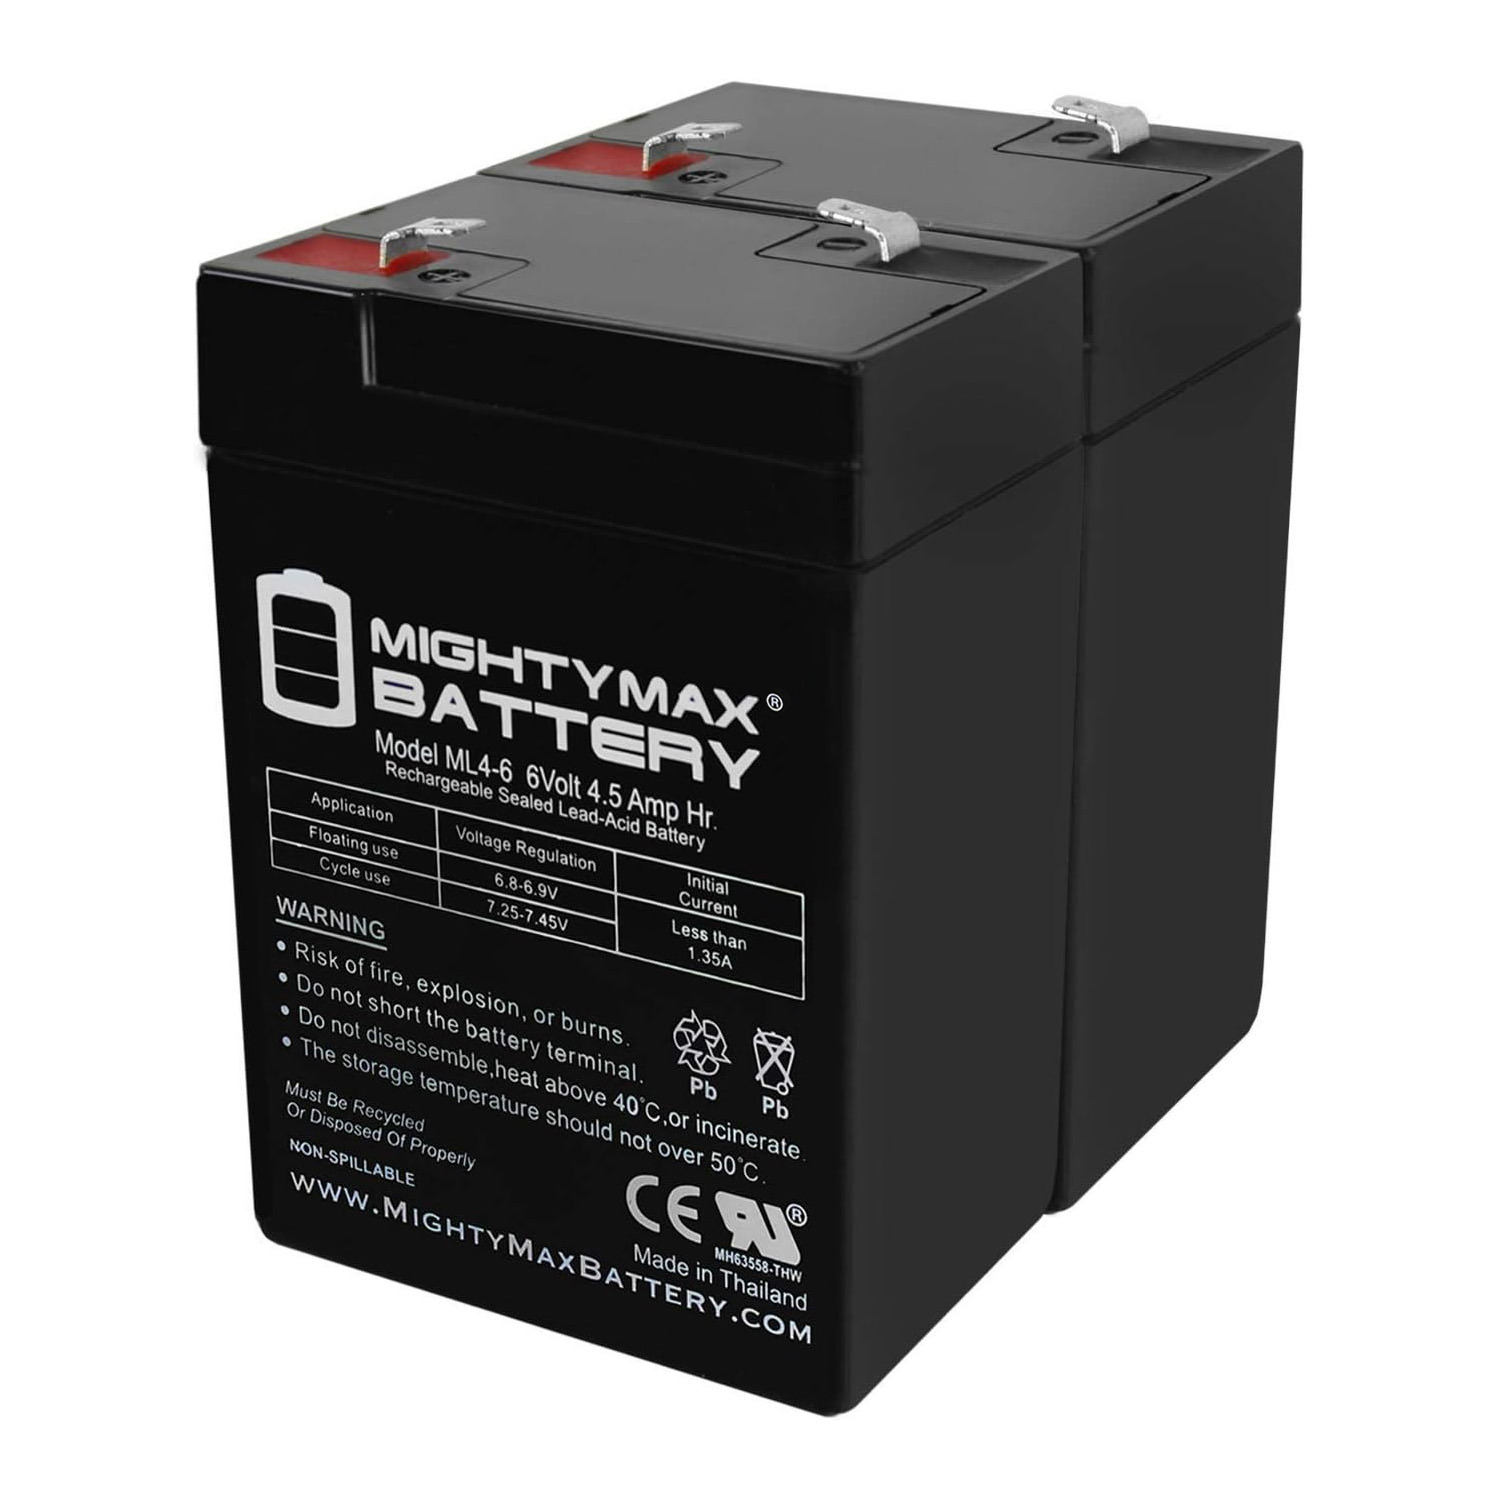 6V 4.5AH SLA Replacement Battery for BatteryGuy SPS SG645T1 - 2 Pack